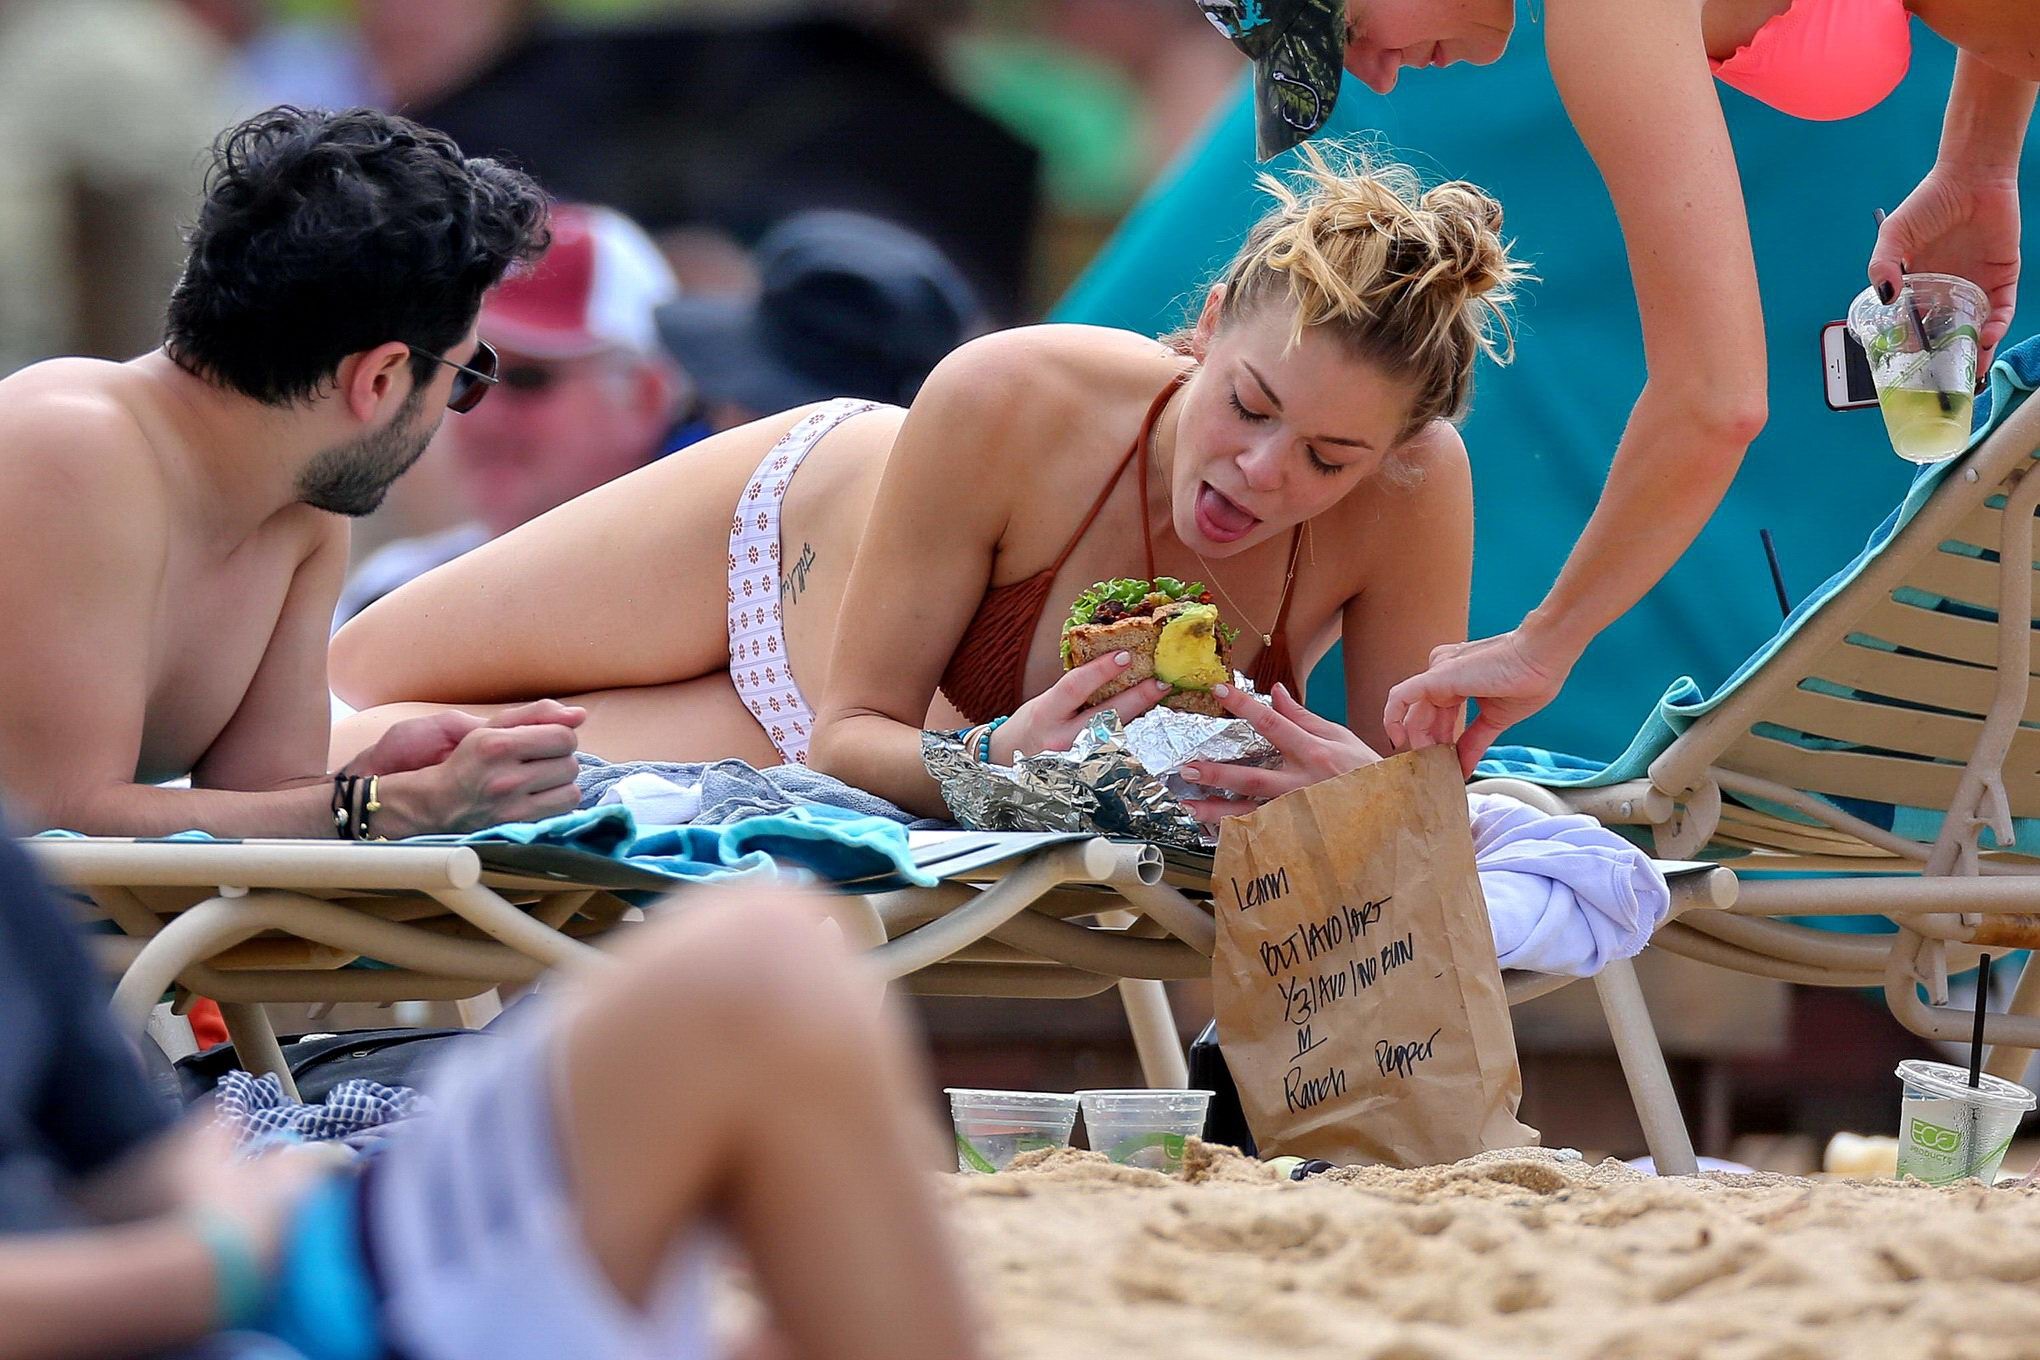 Leann rimes en bikini bronceándose en una playa de hawaii
 #75203282